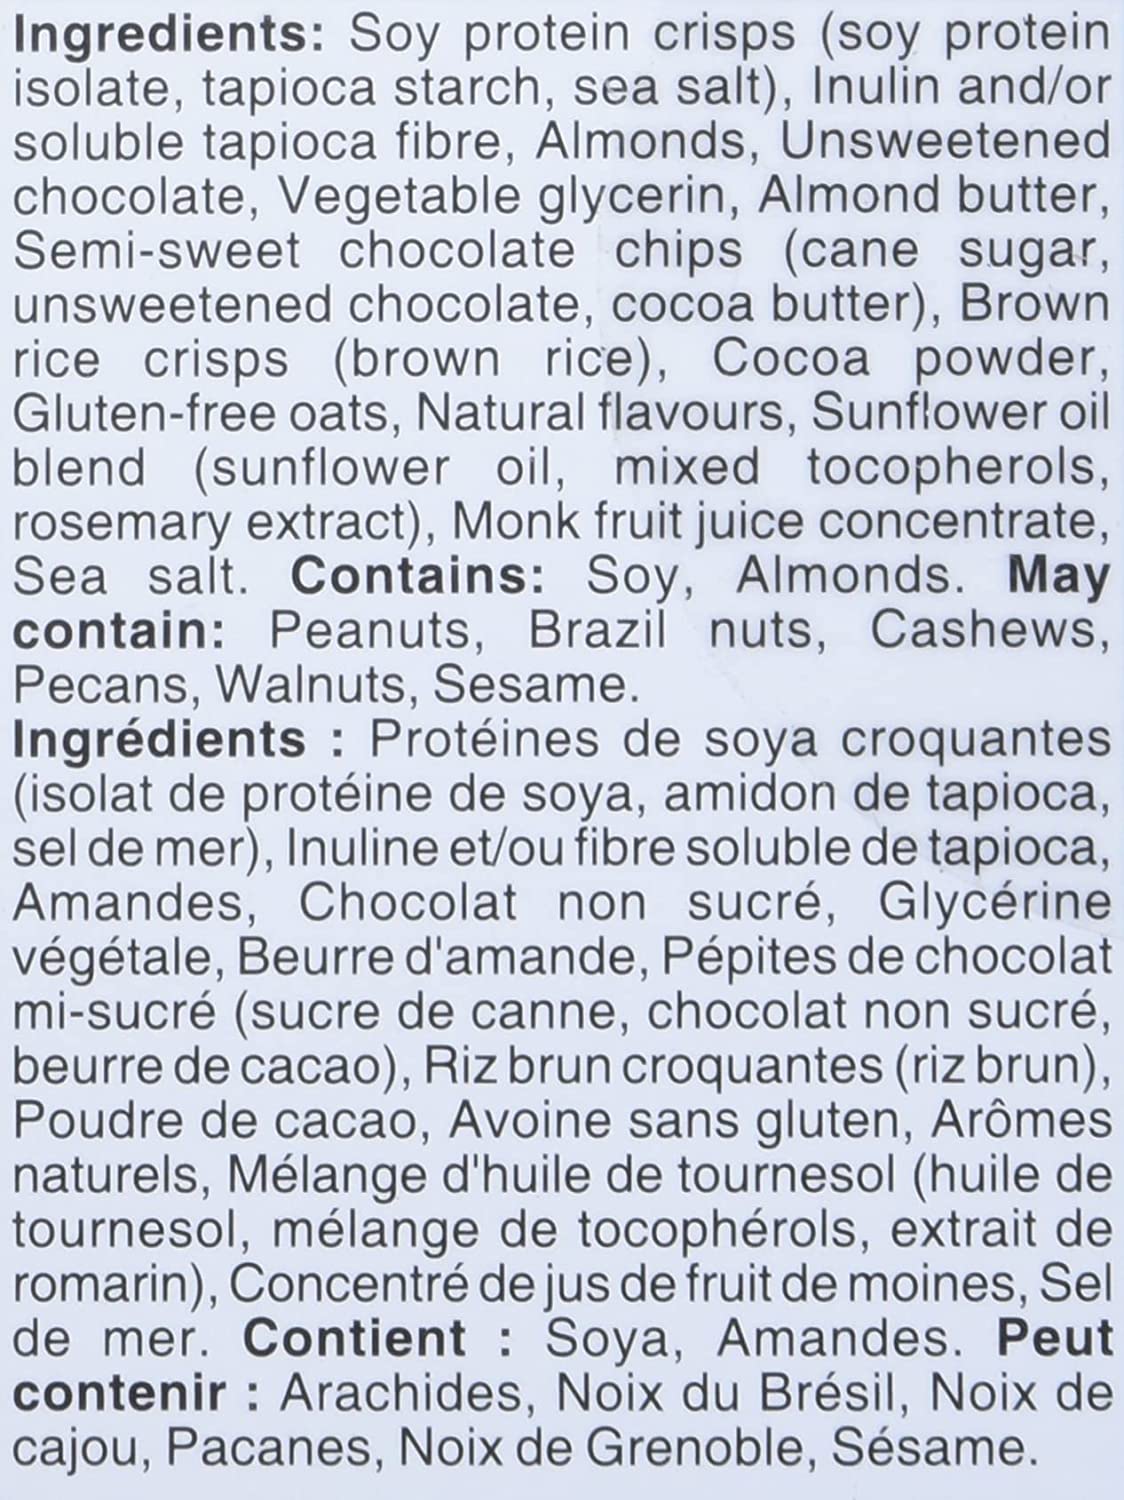 Simply Protein Snack Bar Dark Chocolate Almond / 12x40g